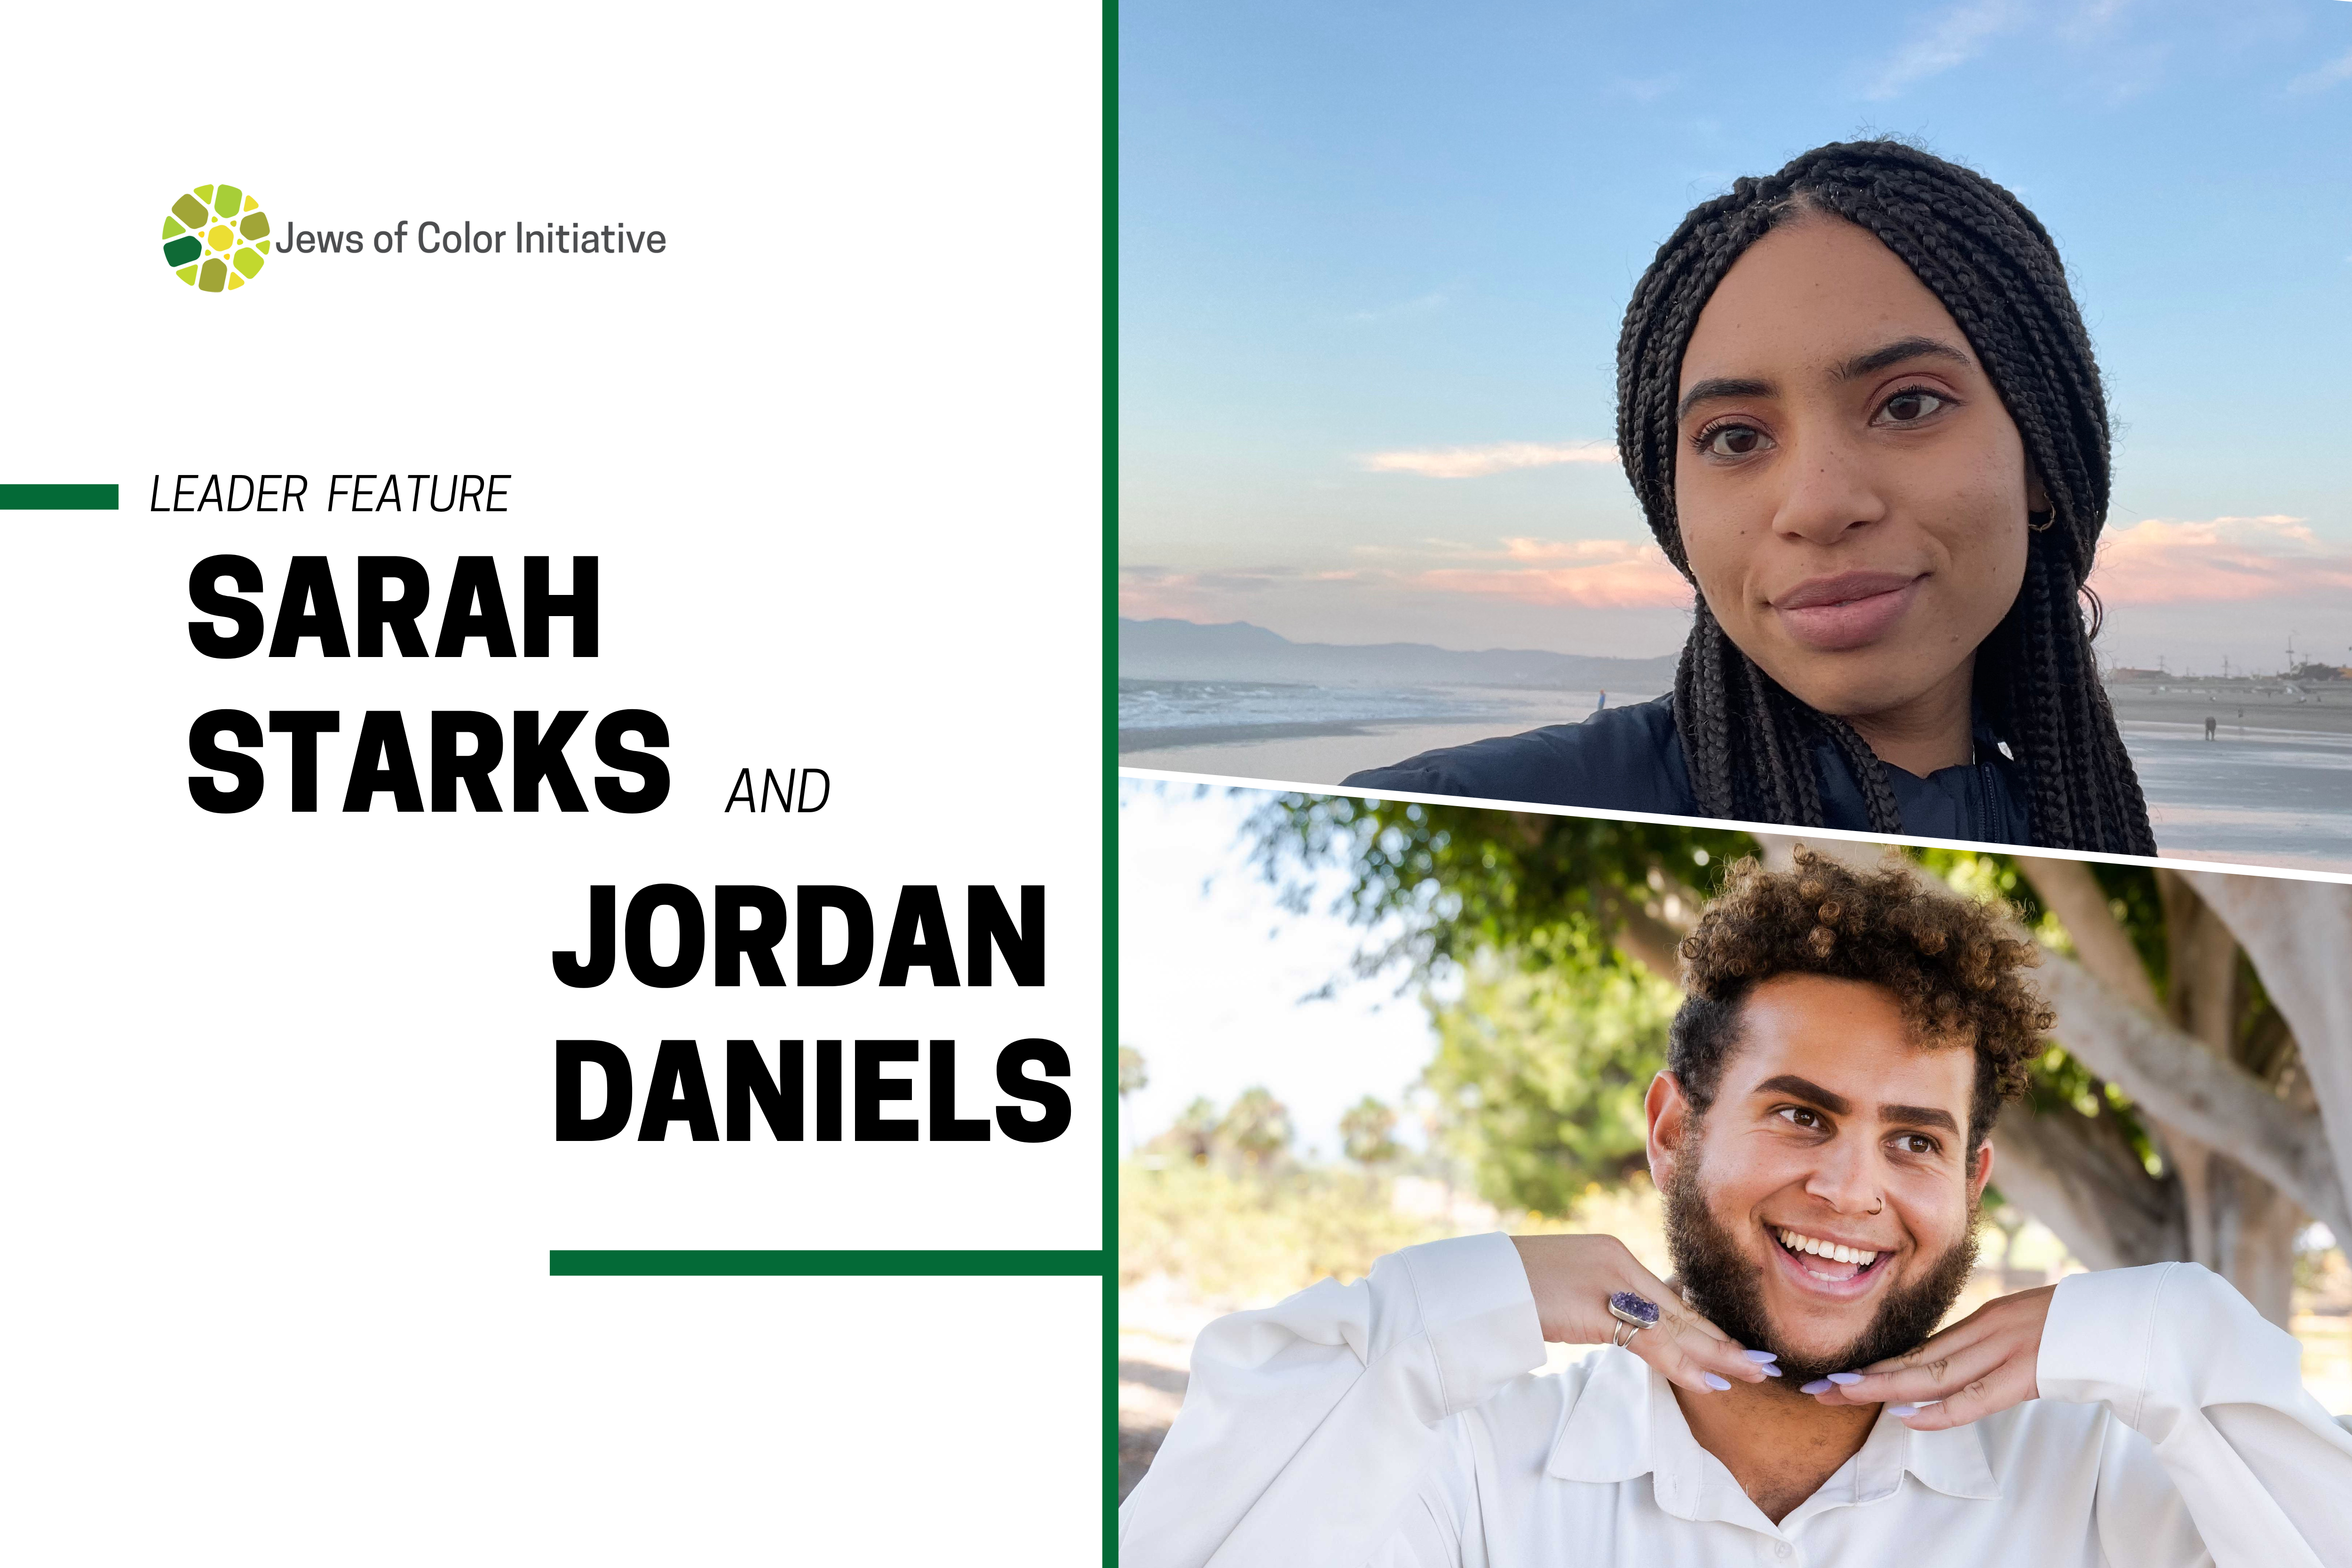 Leader Feature: Sarah Starks and Jordan Daniels; Image shows headshot photos